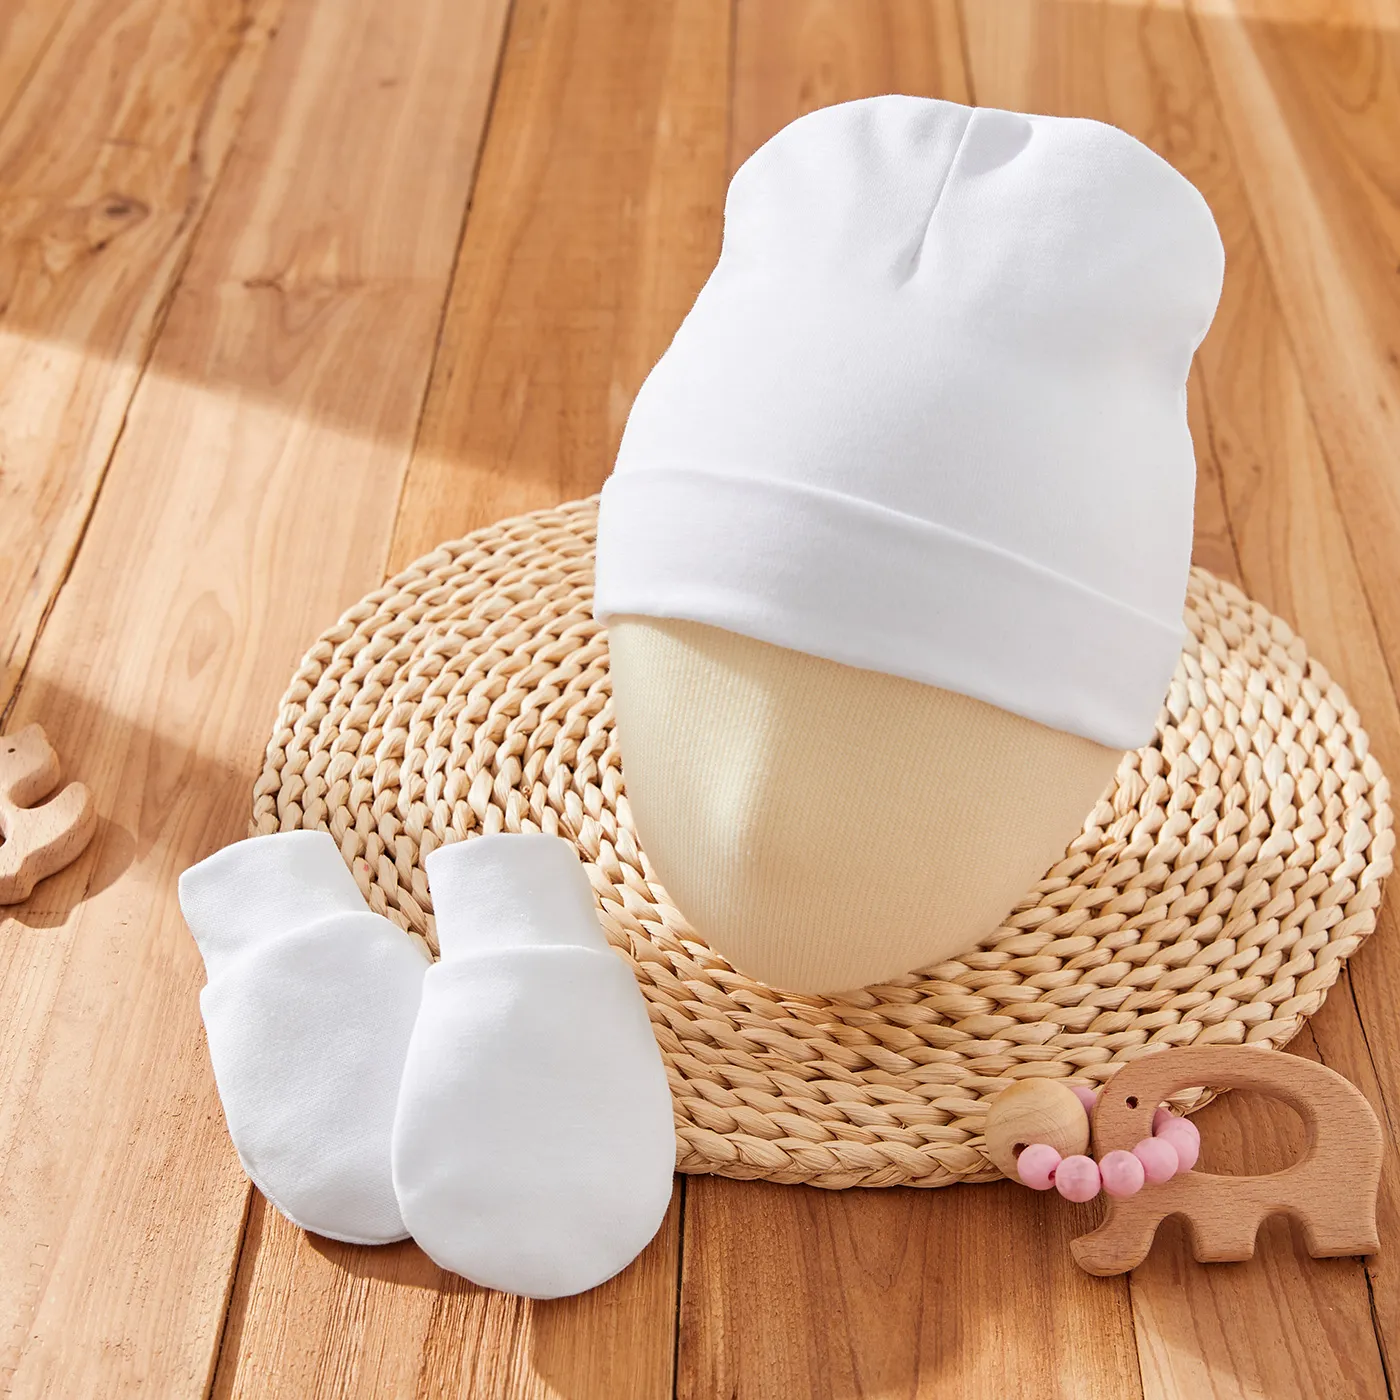 2-piece Baby Hat and Glove set